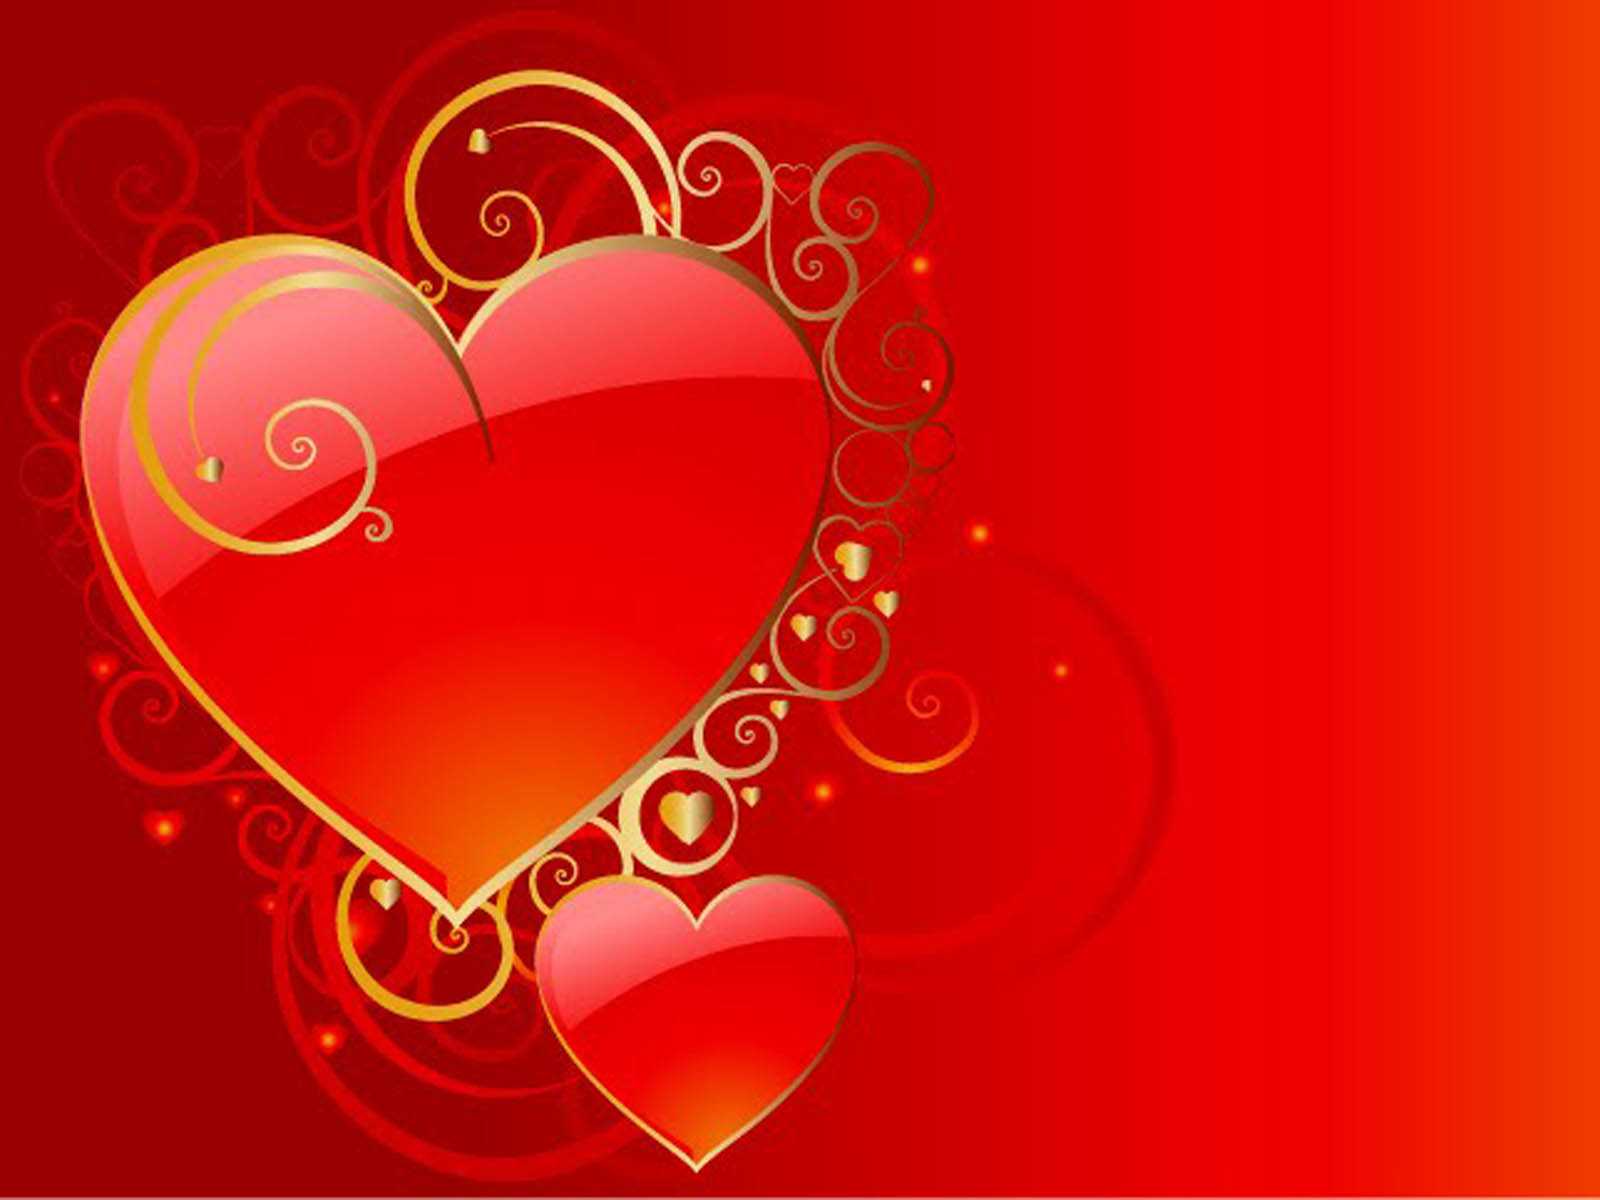 the Love Heart Wallpapers Love Heart Desktop Wallpapers Love Heart